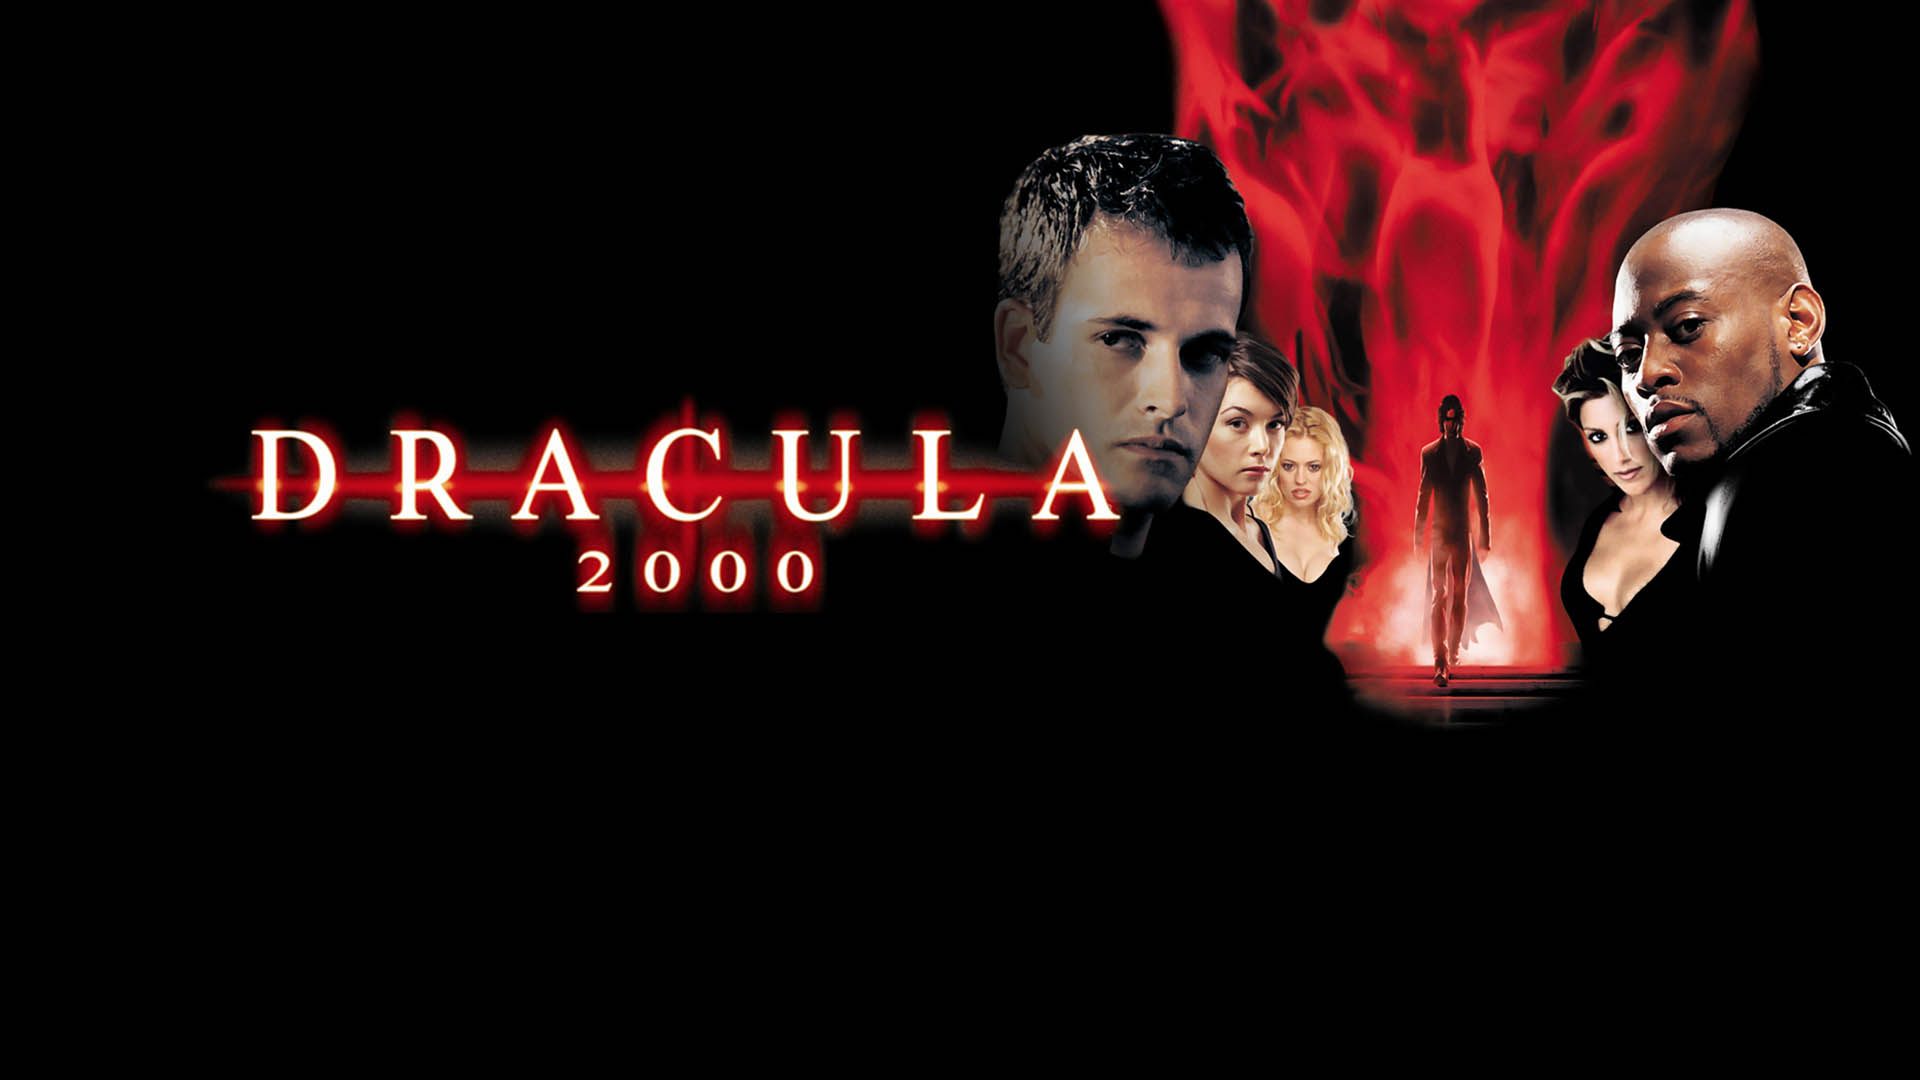 Watch Dracula 2000 Online | Stream Full Movies